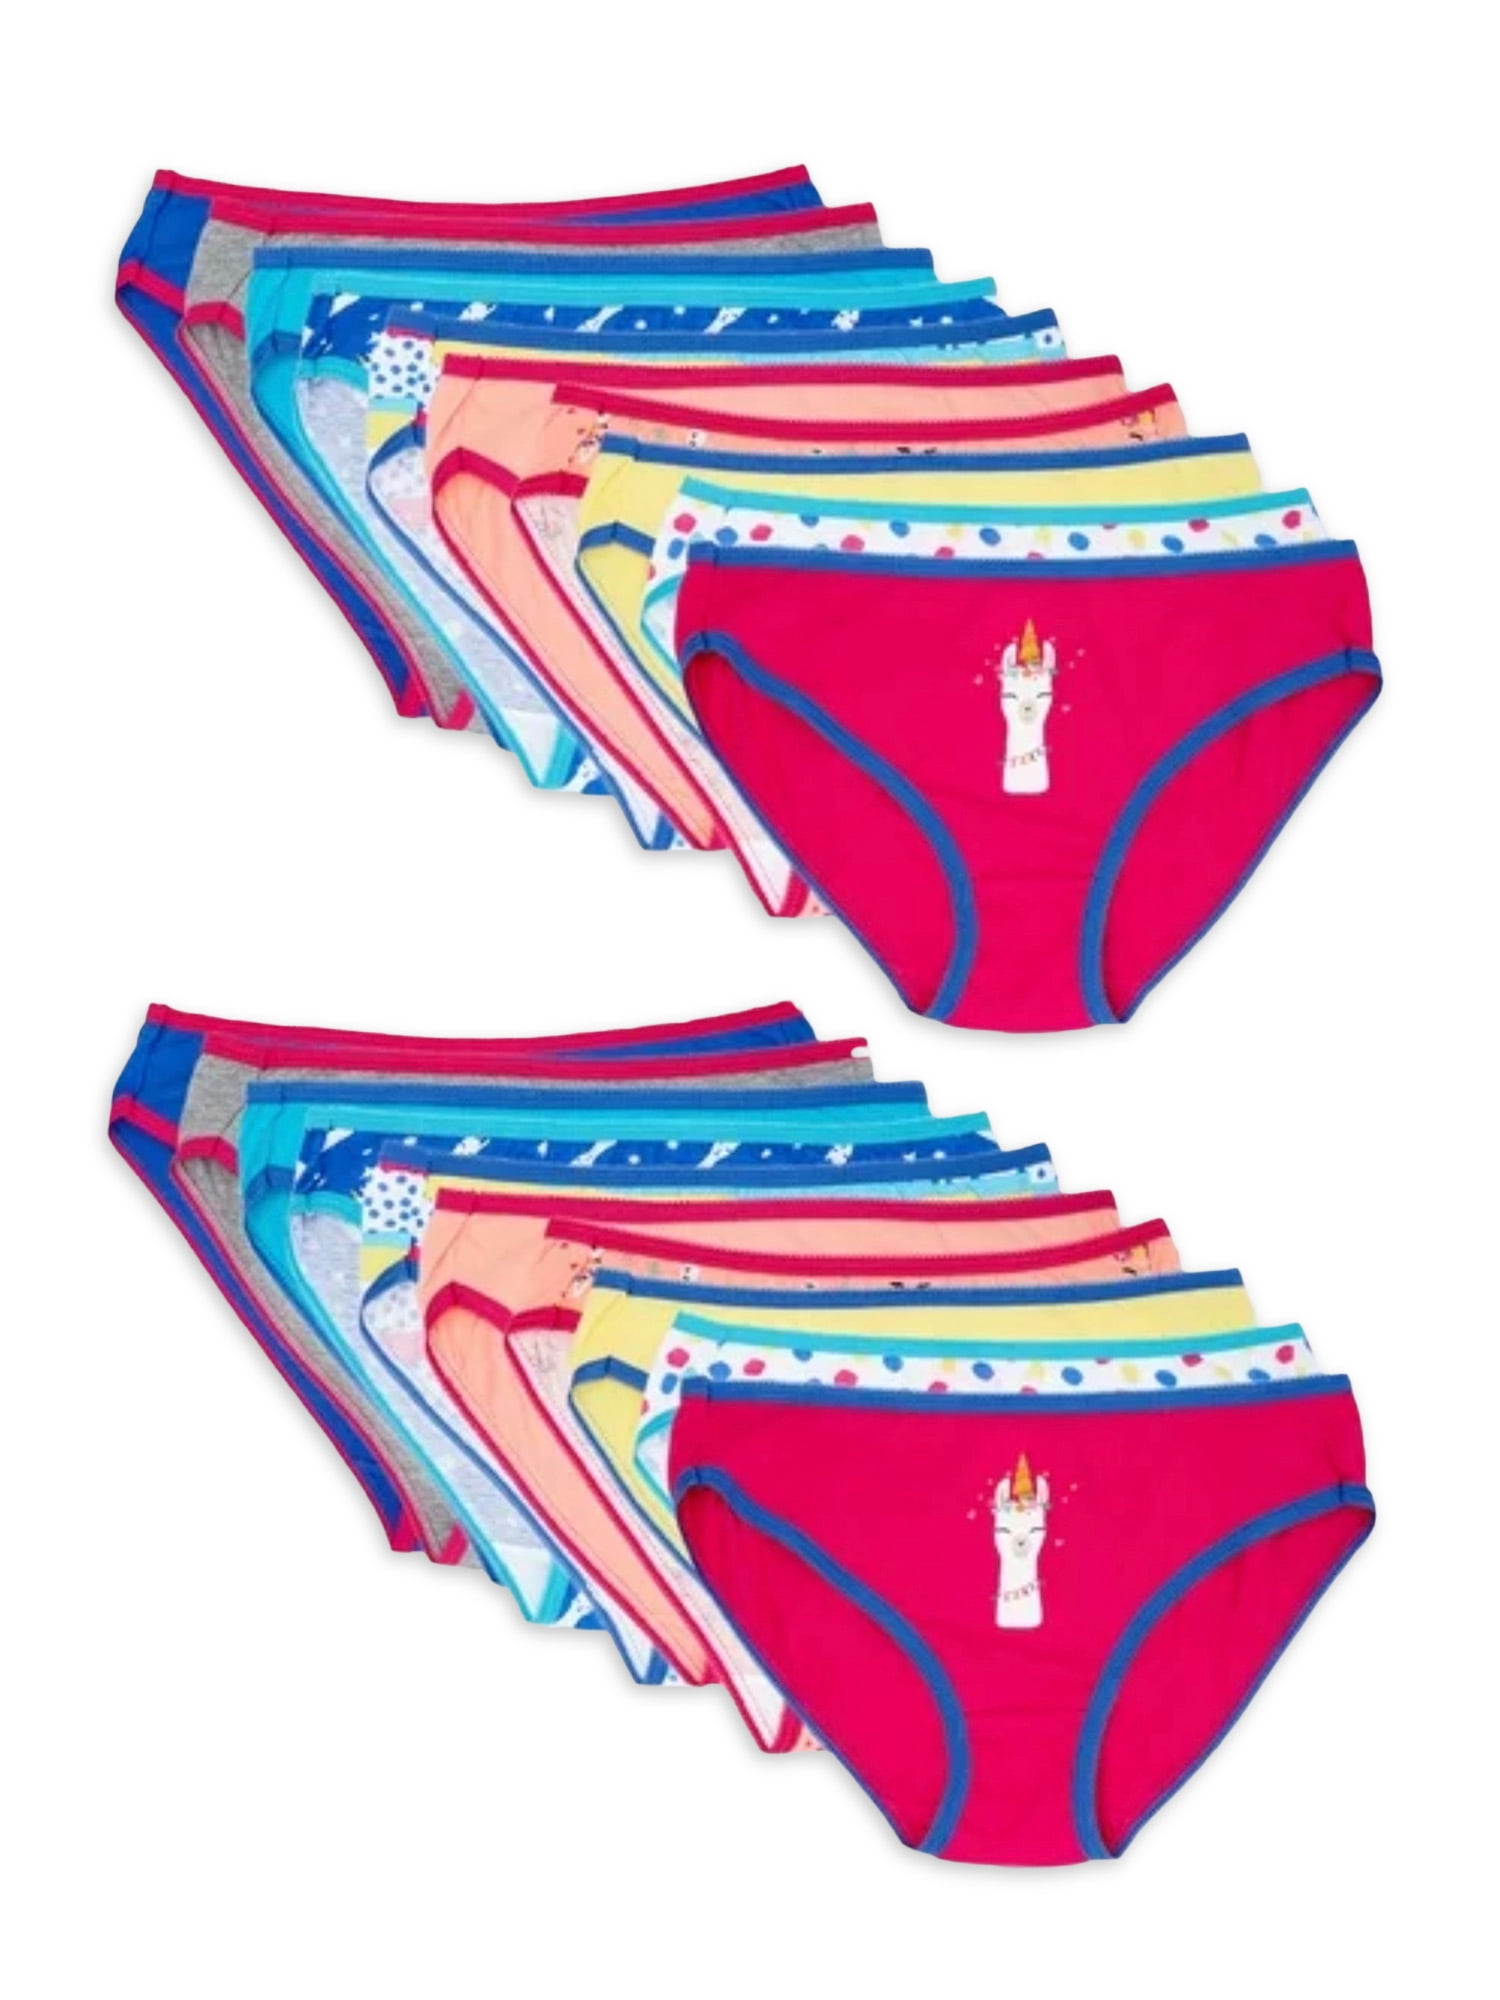 Chili Peppers Multicolor Bikini Underwear For Girls Cute Panties 20